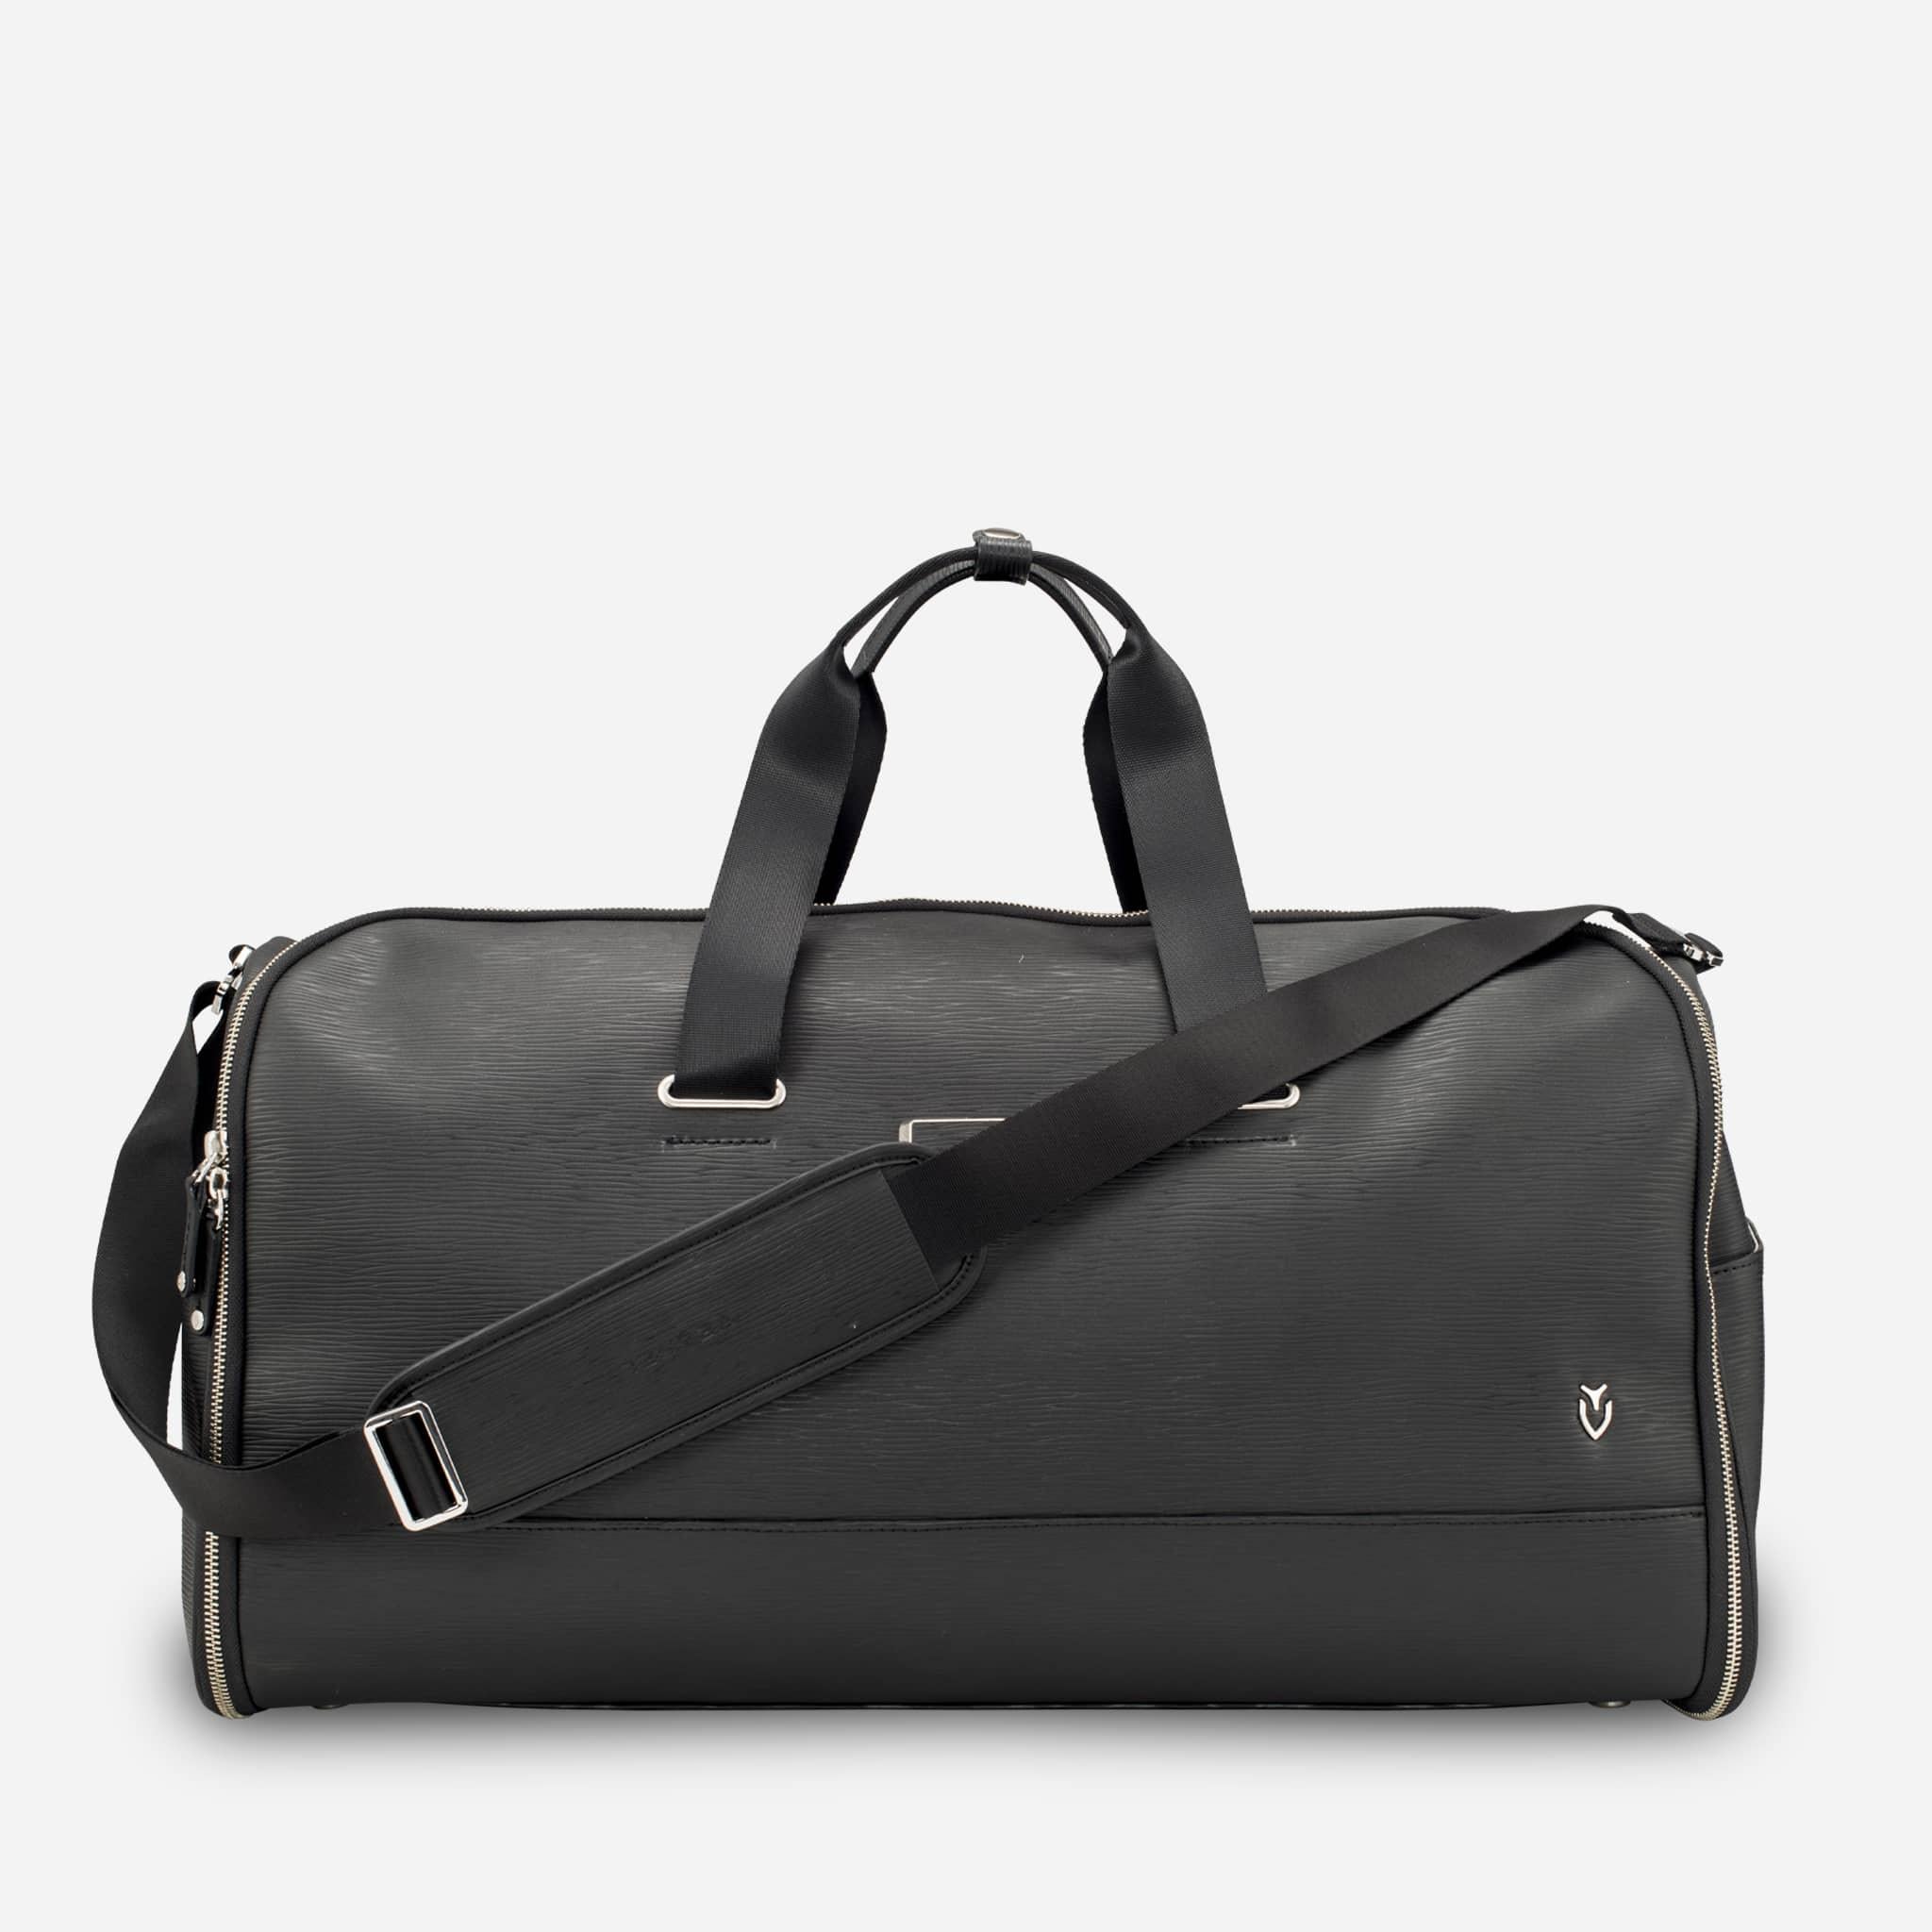 Garment Bag for Travel, Convertible Carry on Garment Duffel Bag